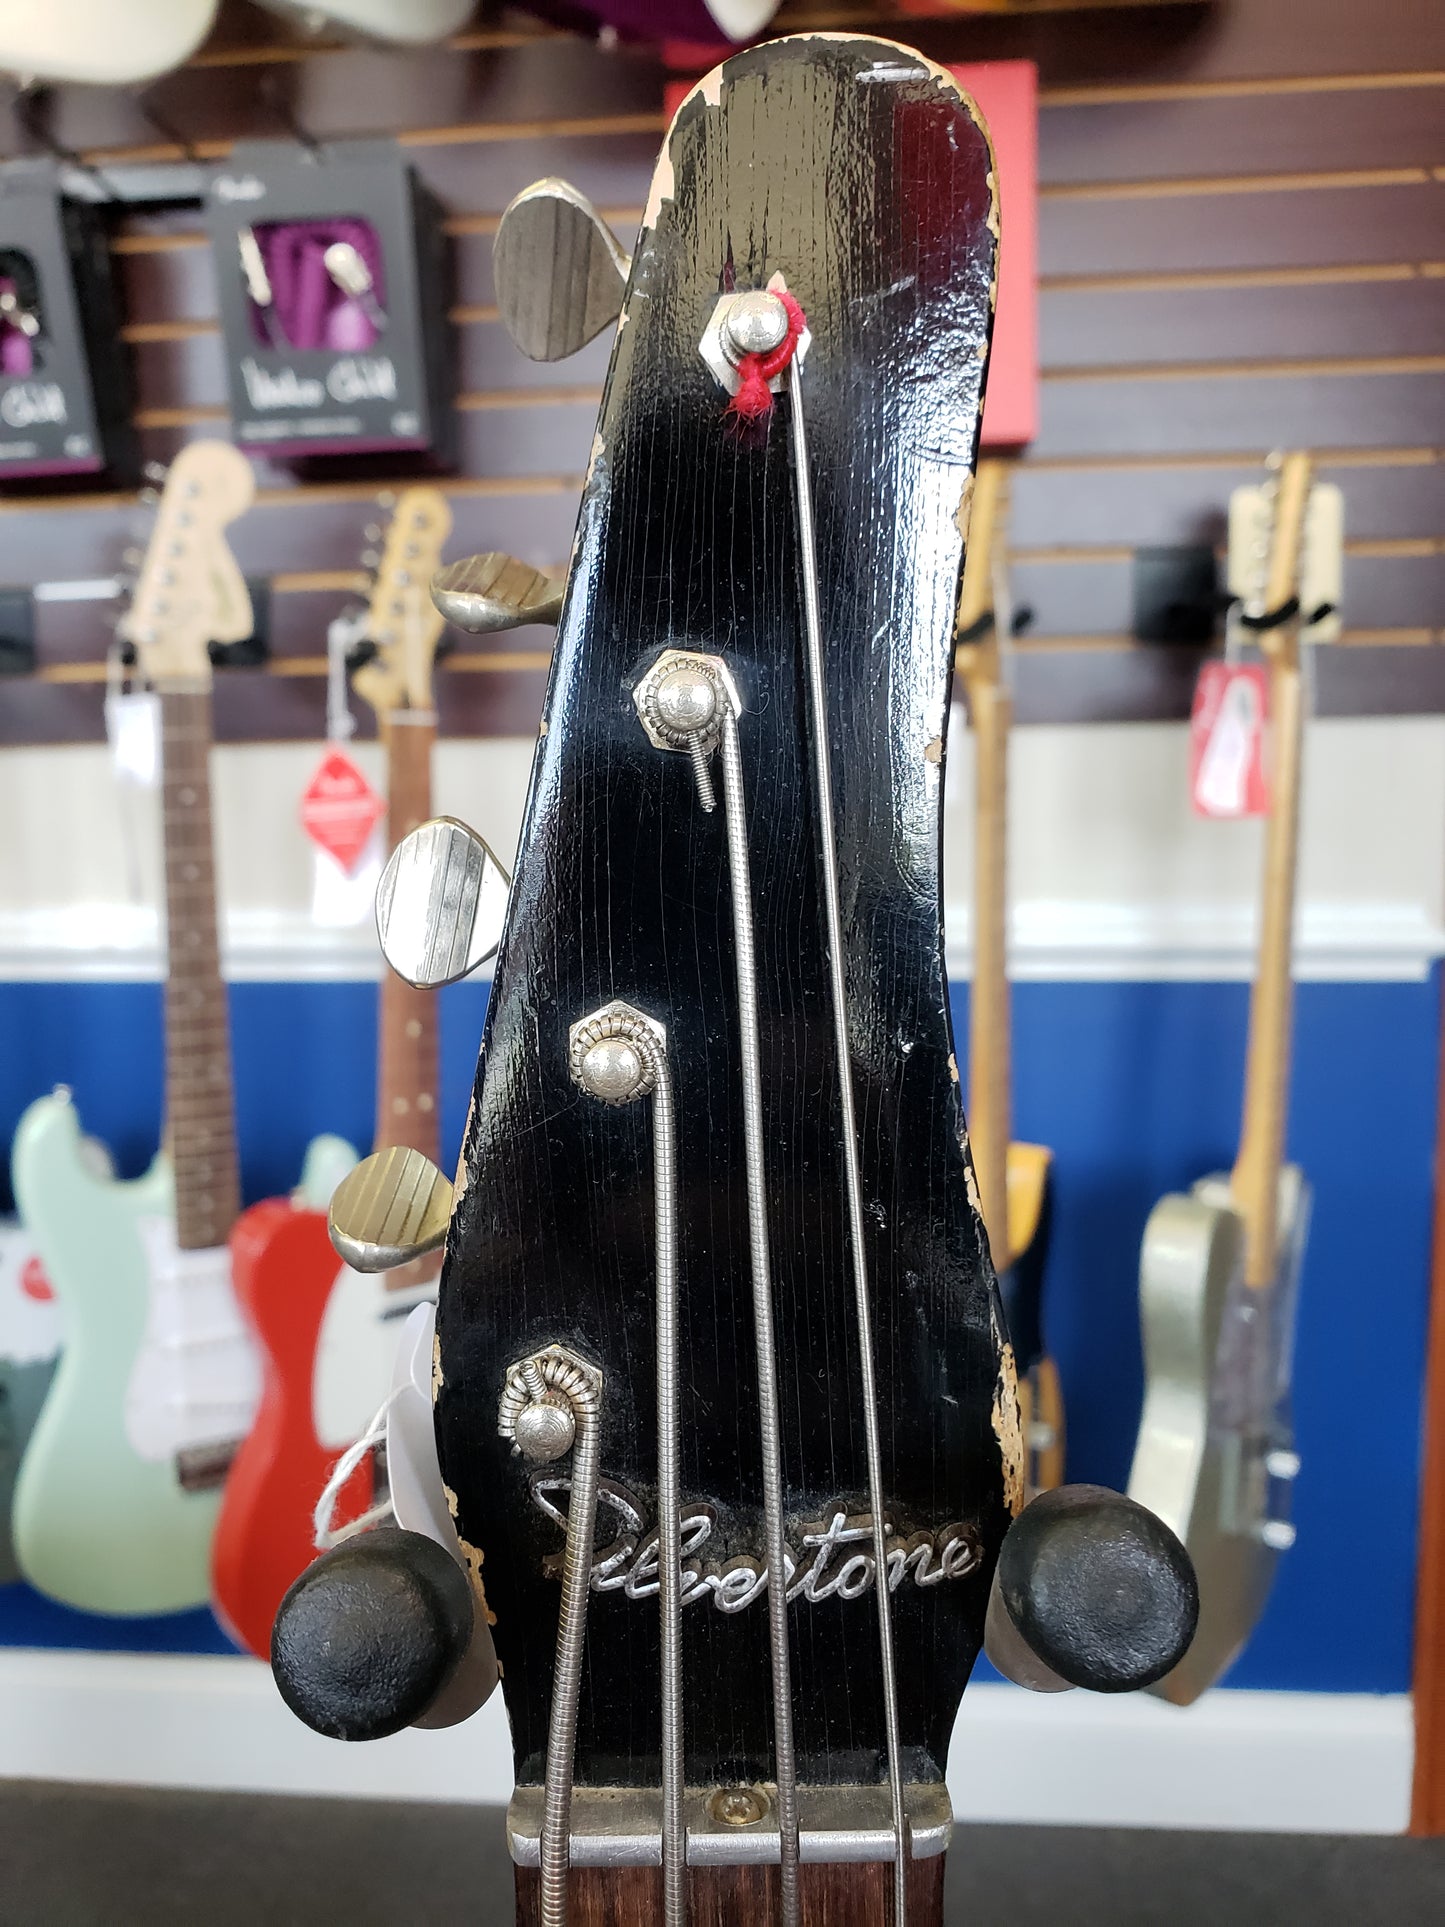 1965 Silvertone Bass 1444